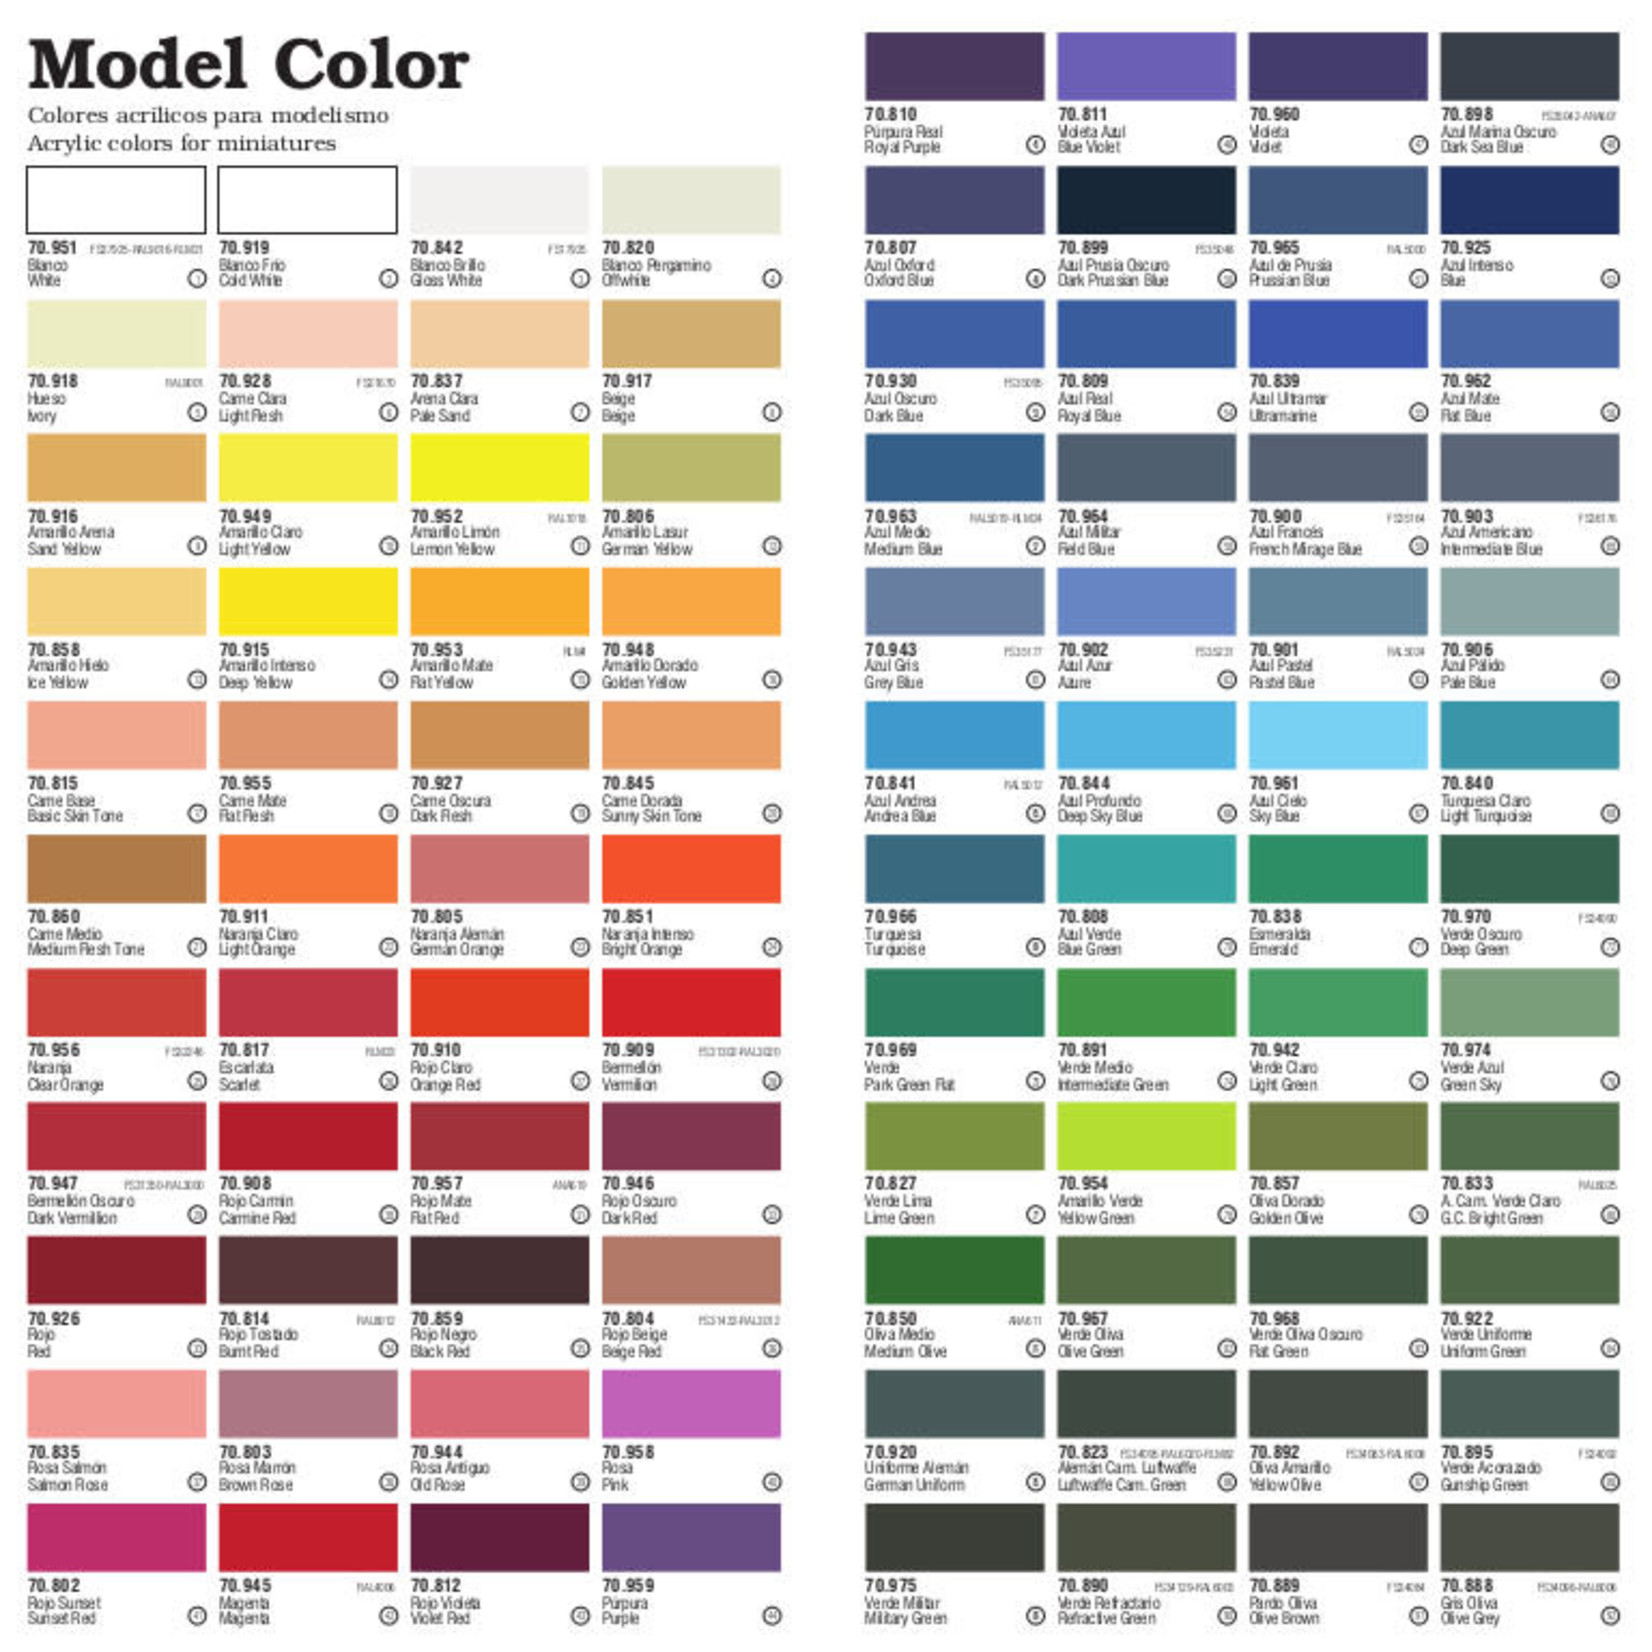 Model Color Mate Vallejo 16ml buy sale online store hobby modeling